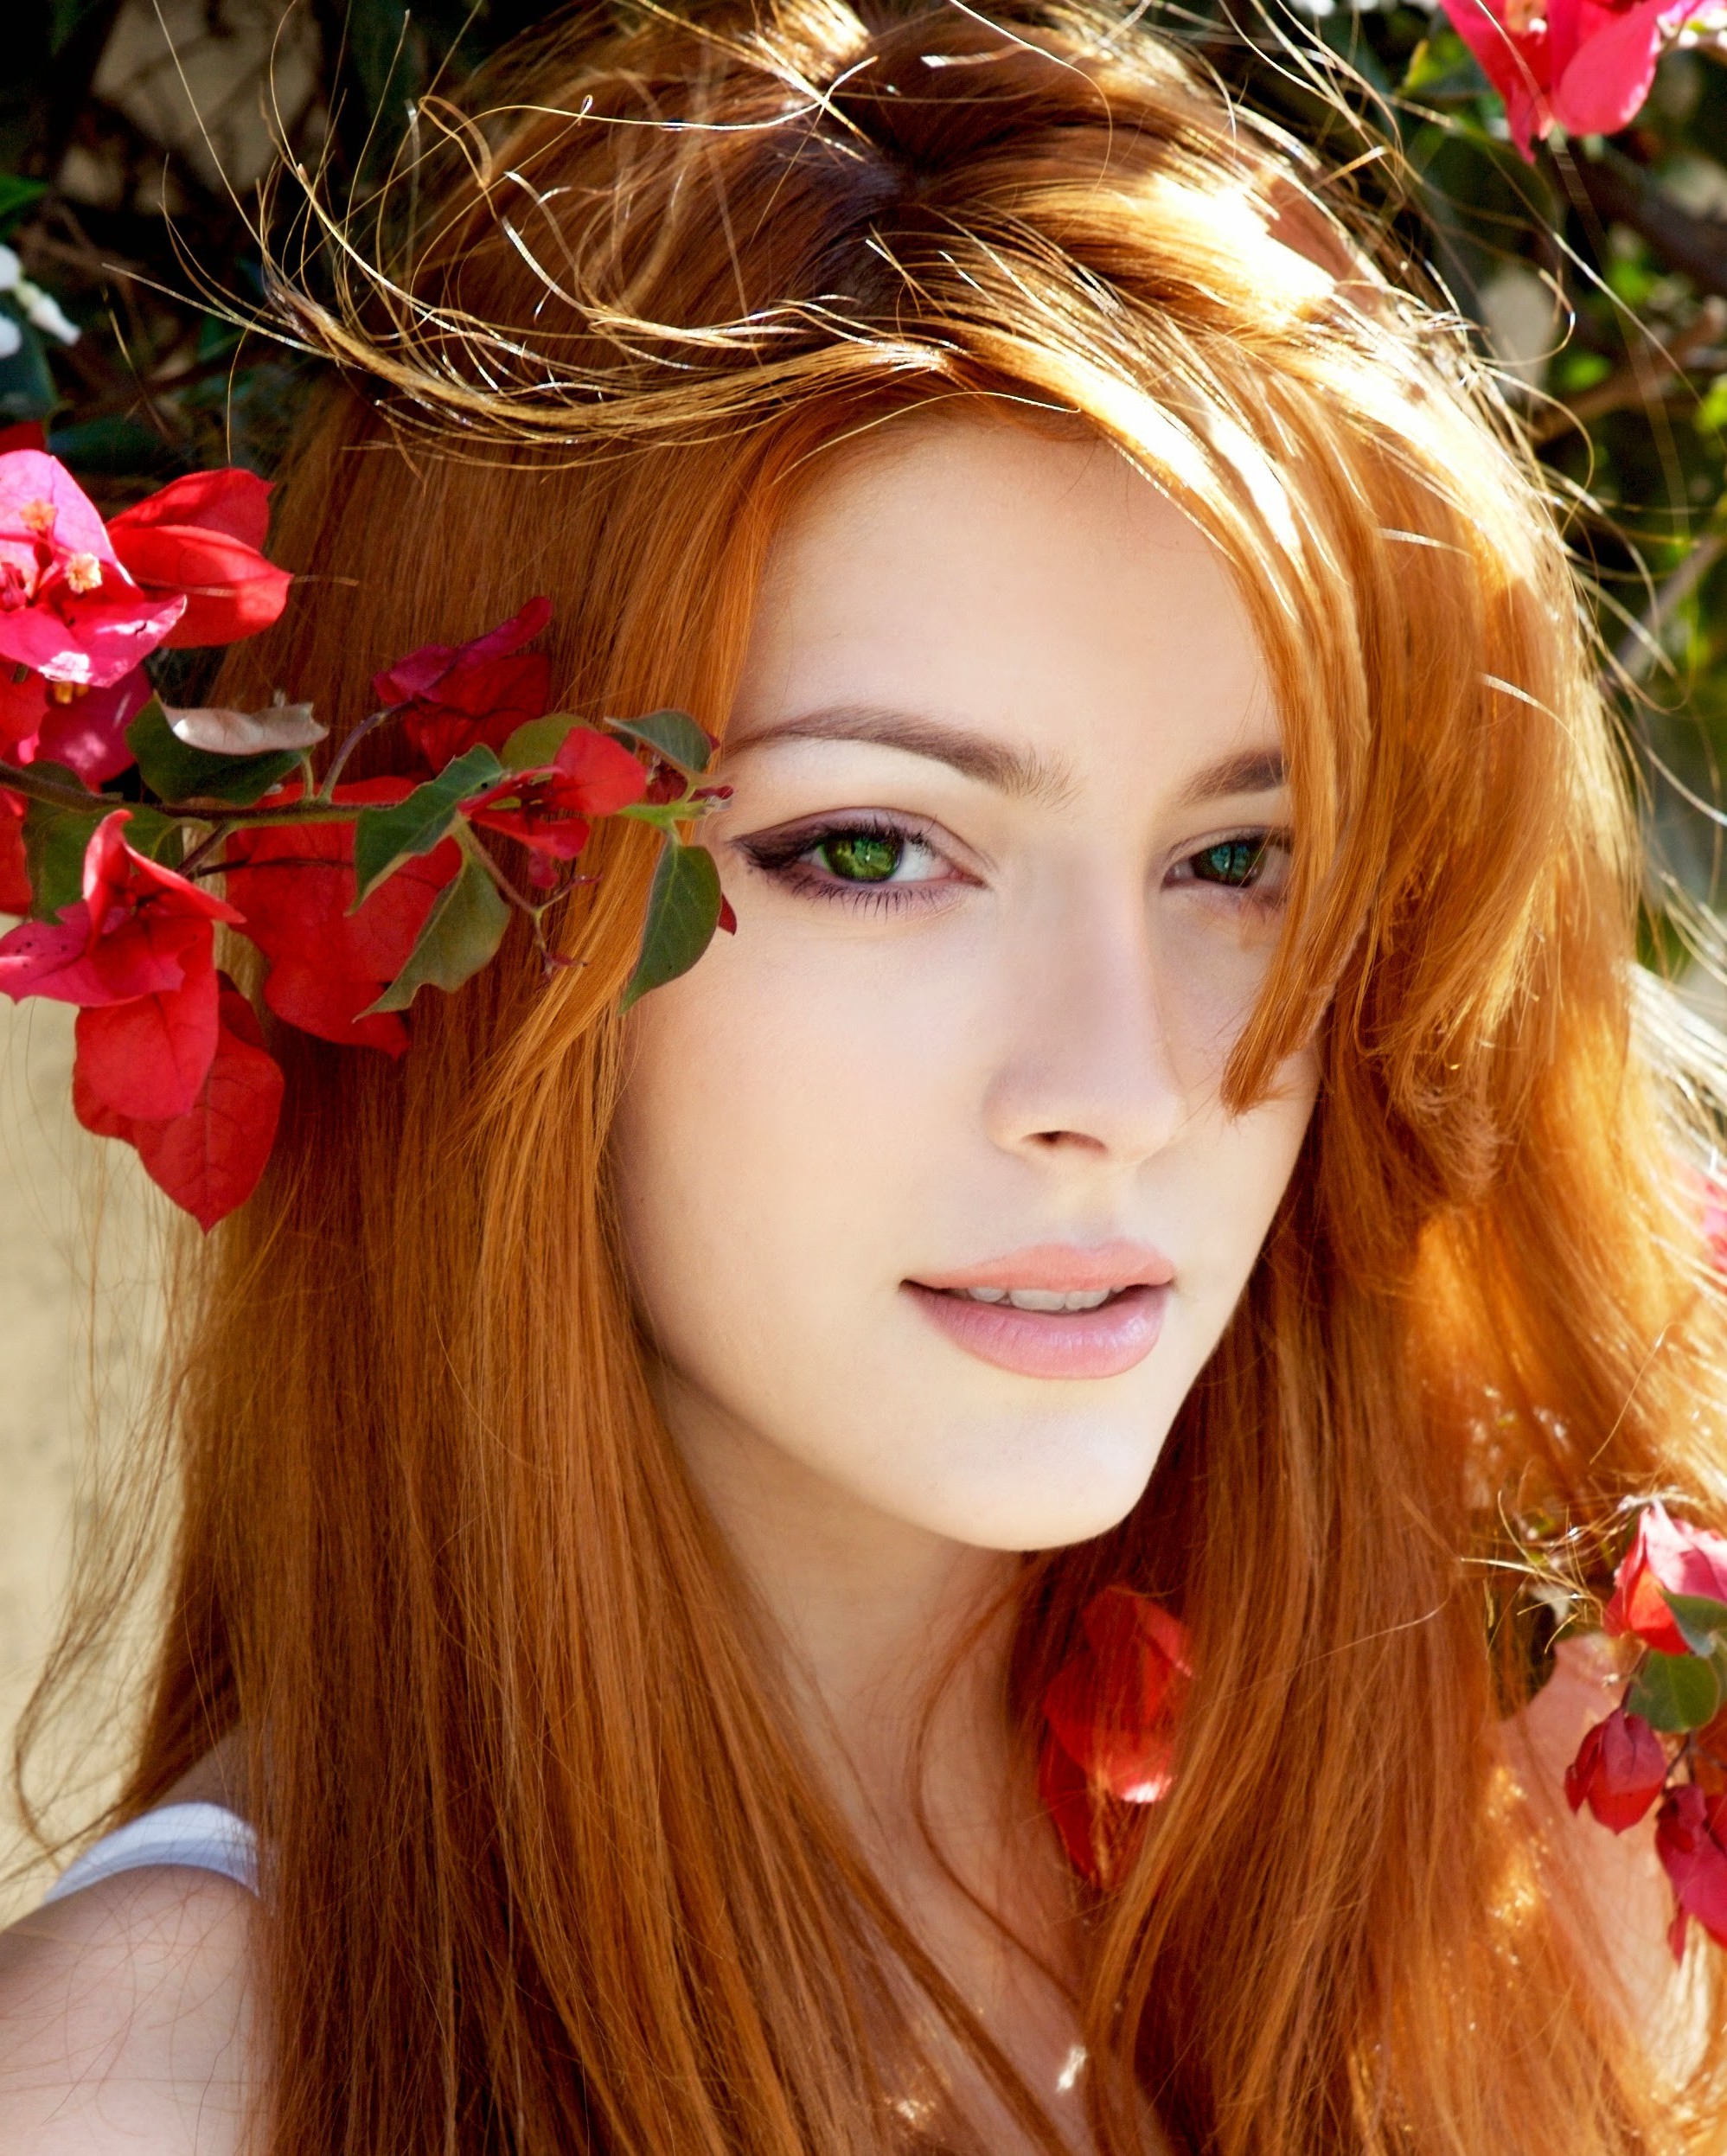 Redhead Girls ~ BEAUTIFUL GIRL WALLPAPERS